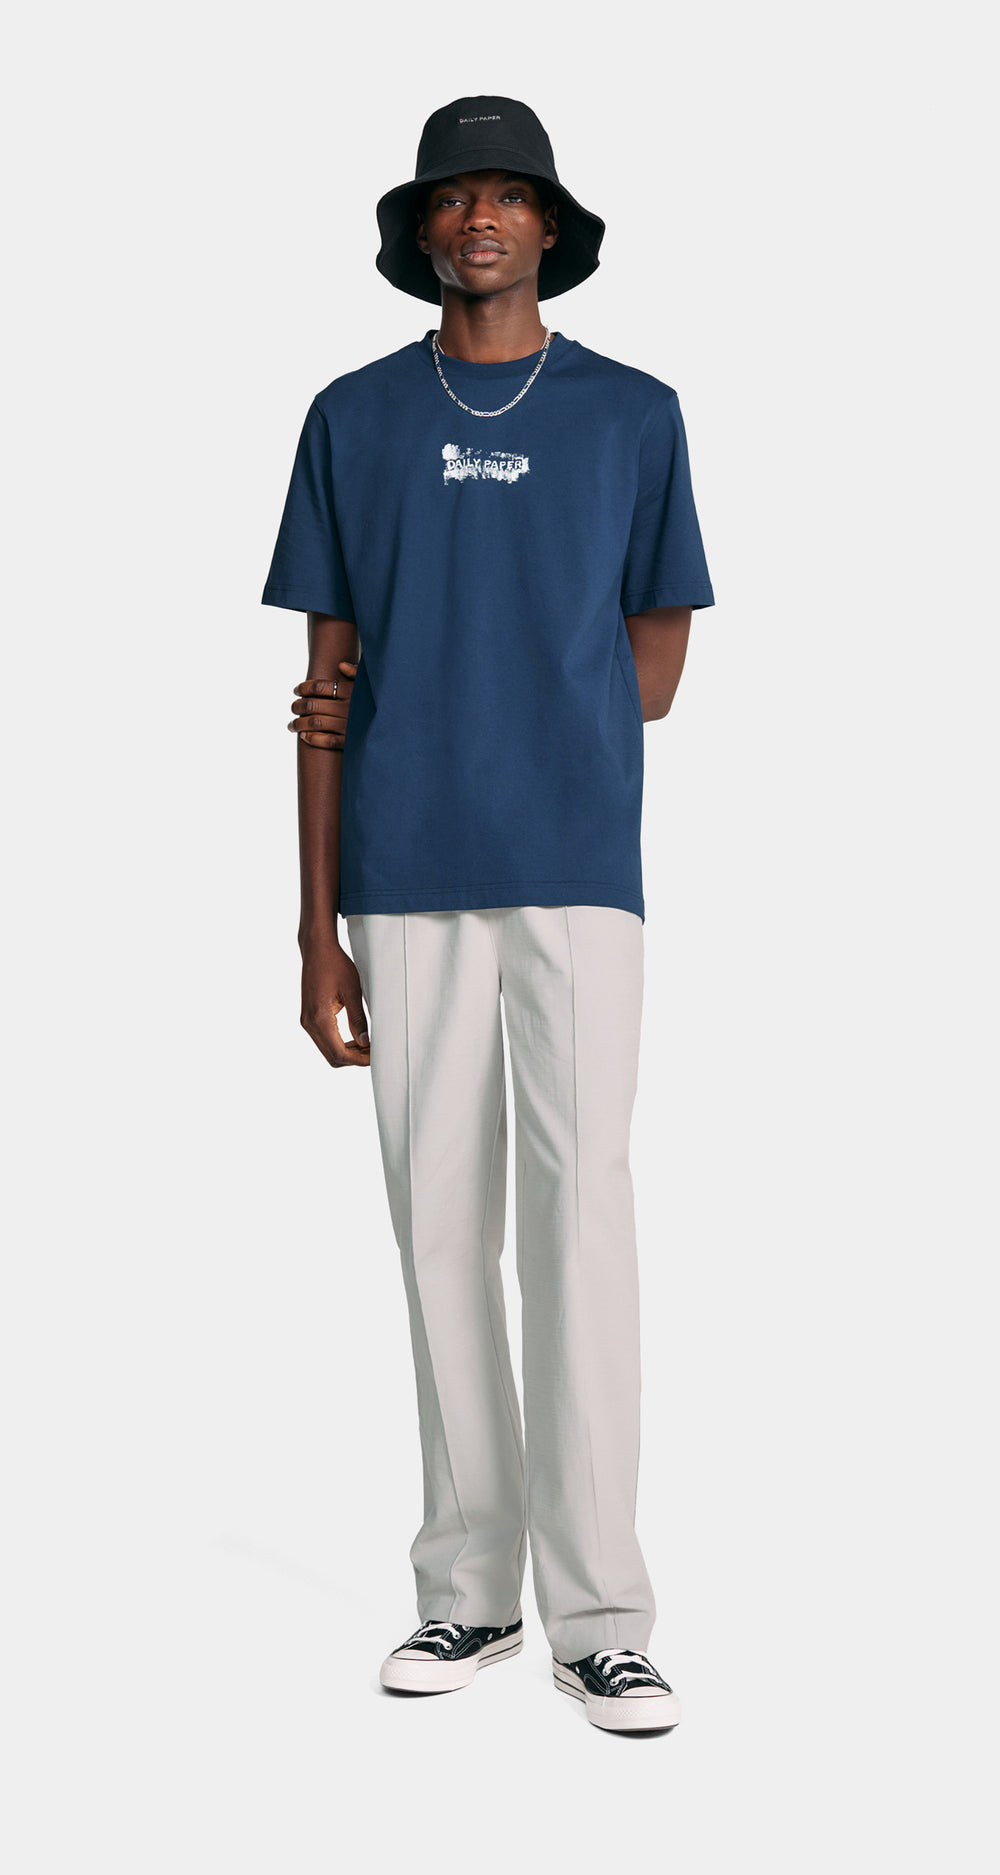 DP - Peagant Blue Scratch Logo T-Shirt - Men - Front